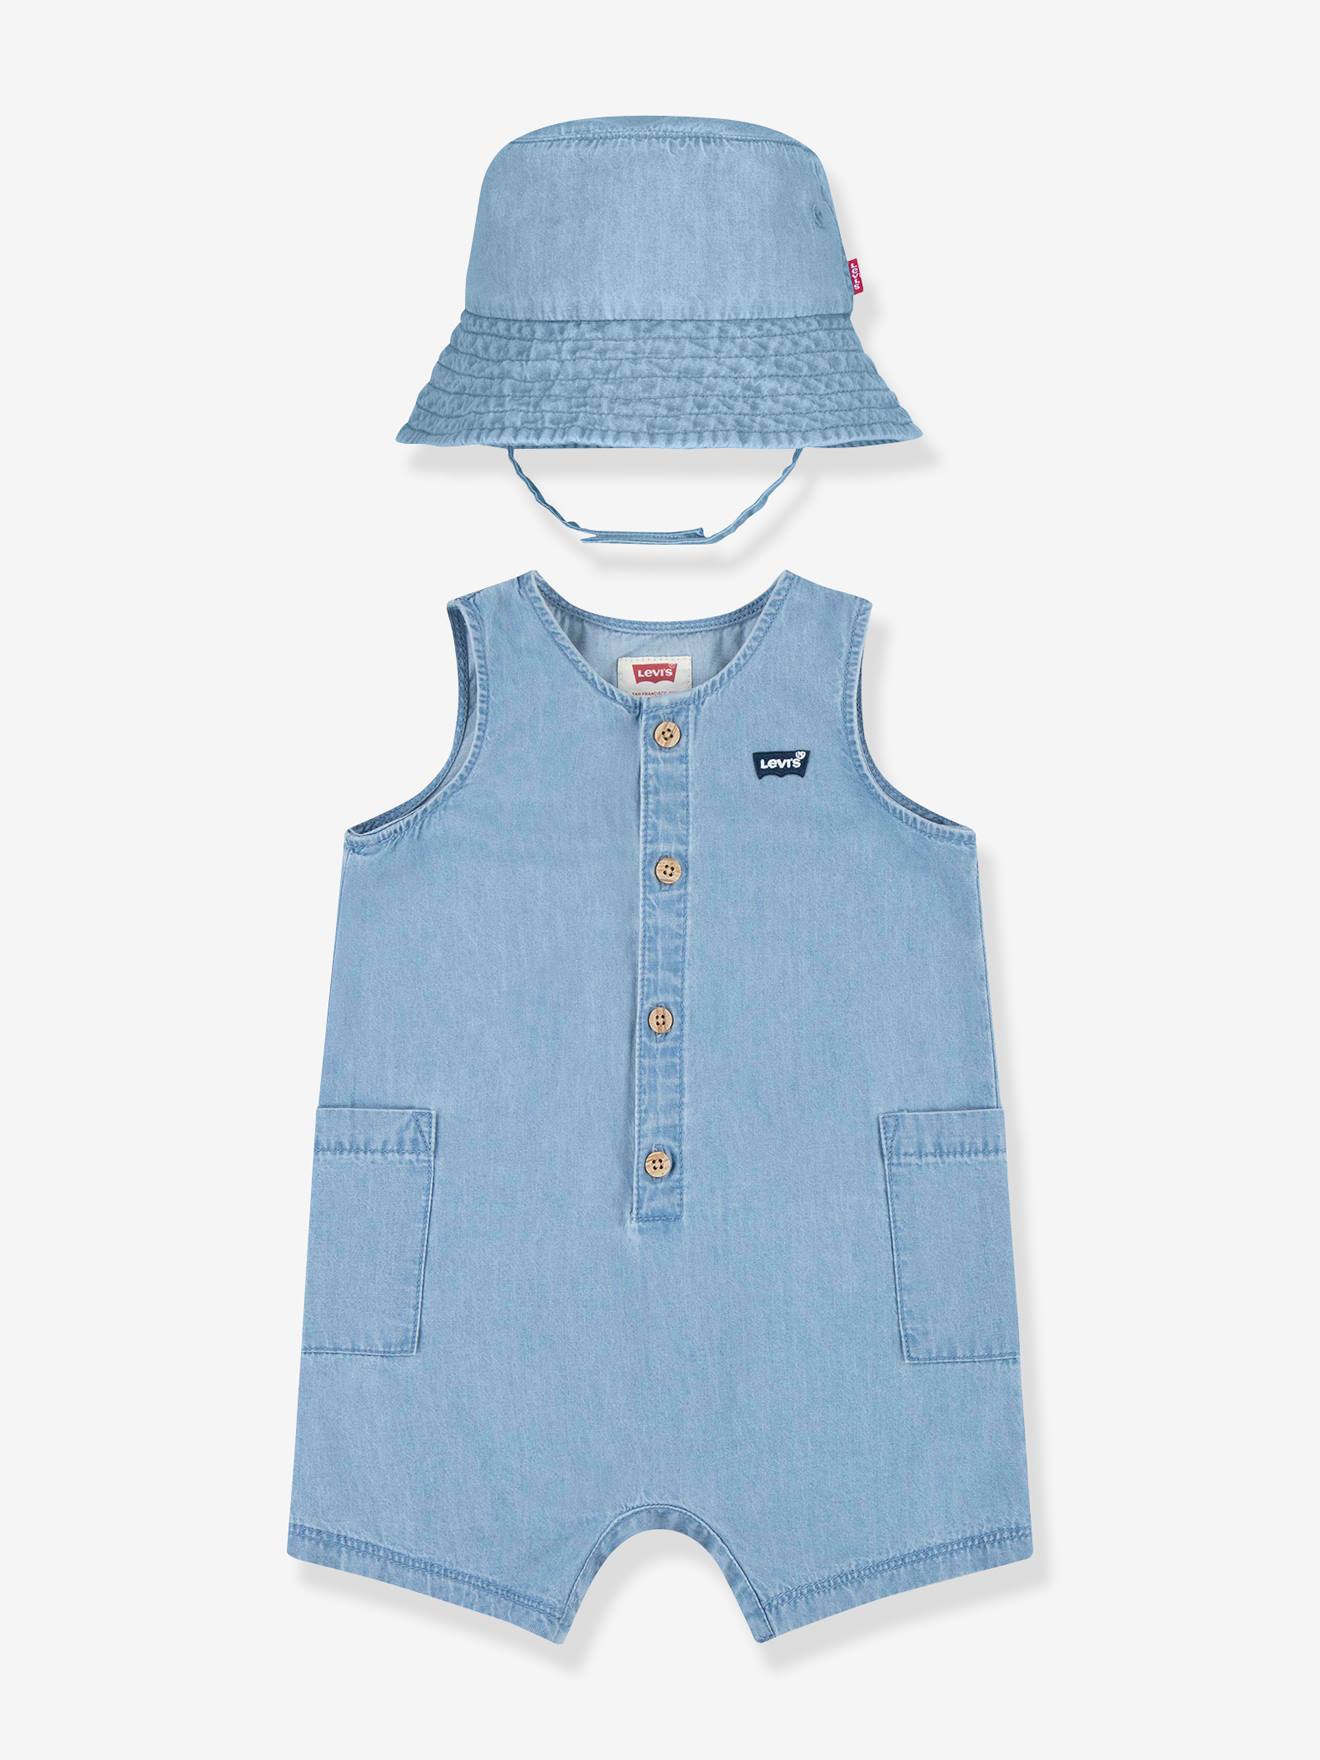 Jumpsuit + Bucket Hat Combo by Levi’s(r) for Babies bleached denim